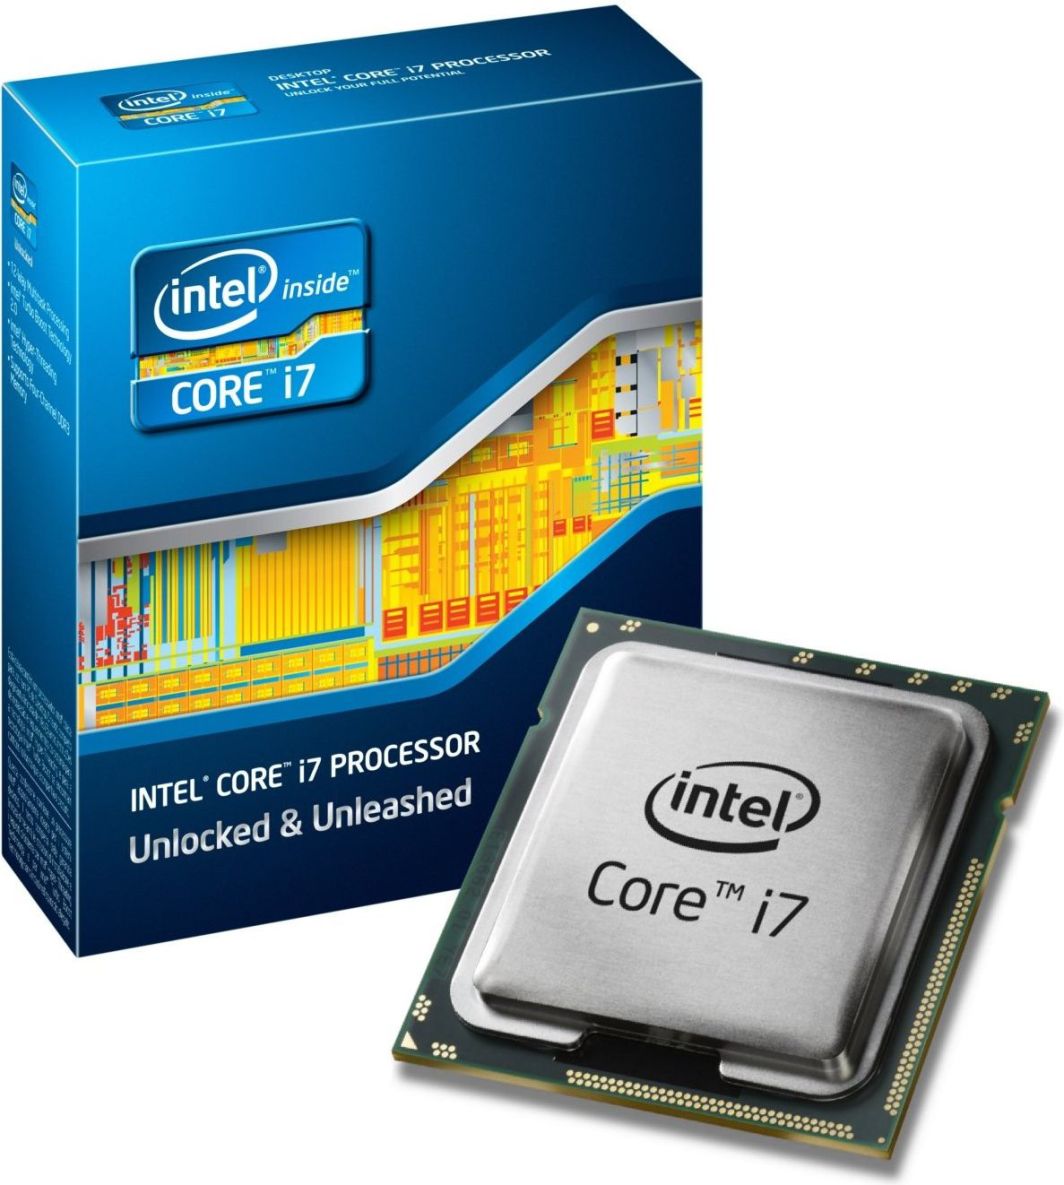 Интел сор. Процессор Intel® Core™ i7. Процессор Интел Core i7. Процессор для ноутбука Intel Core i7. Процессор Интел коре ай 7.